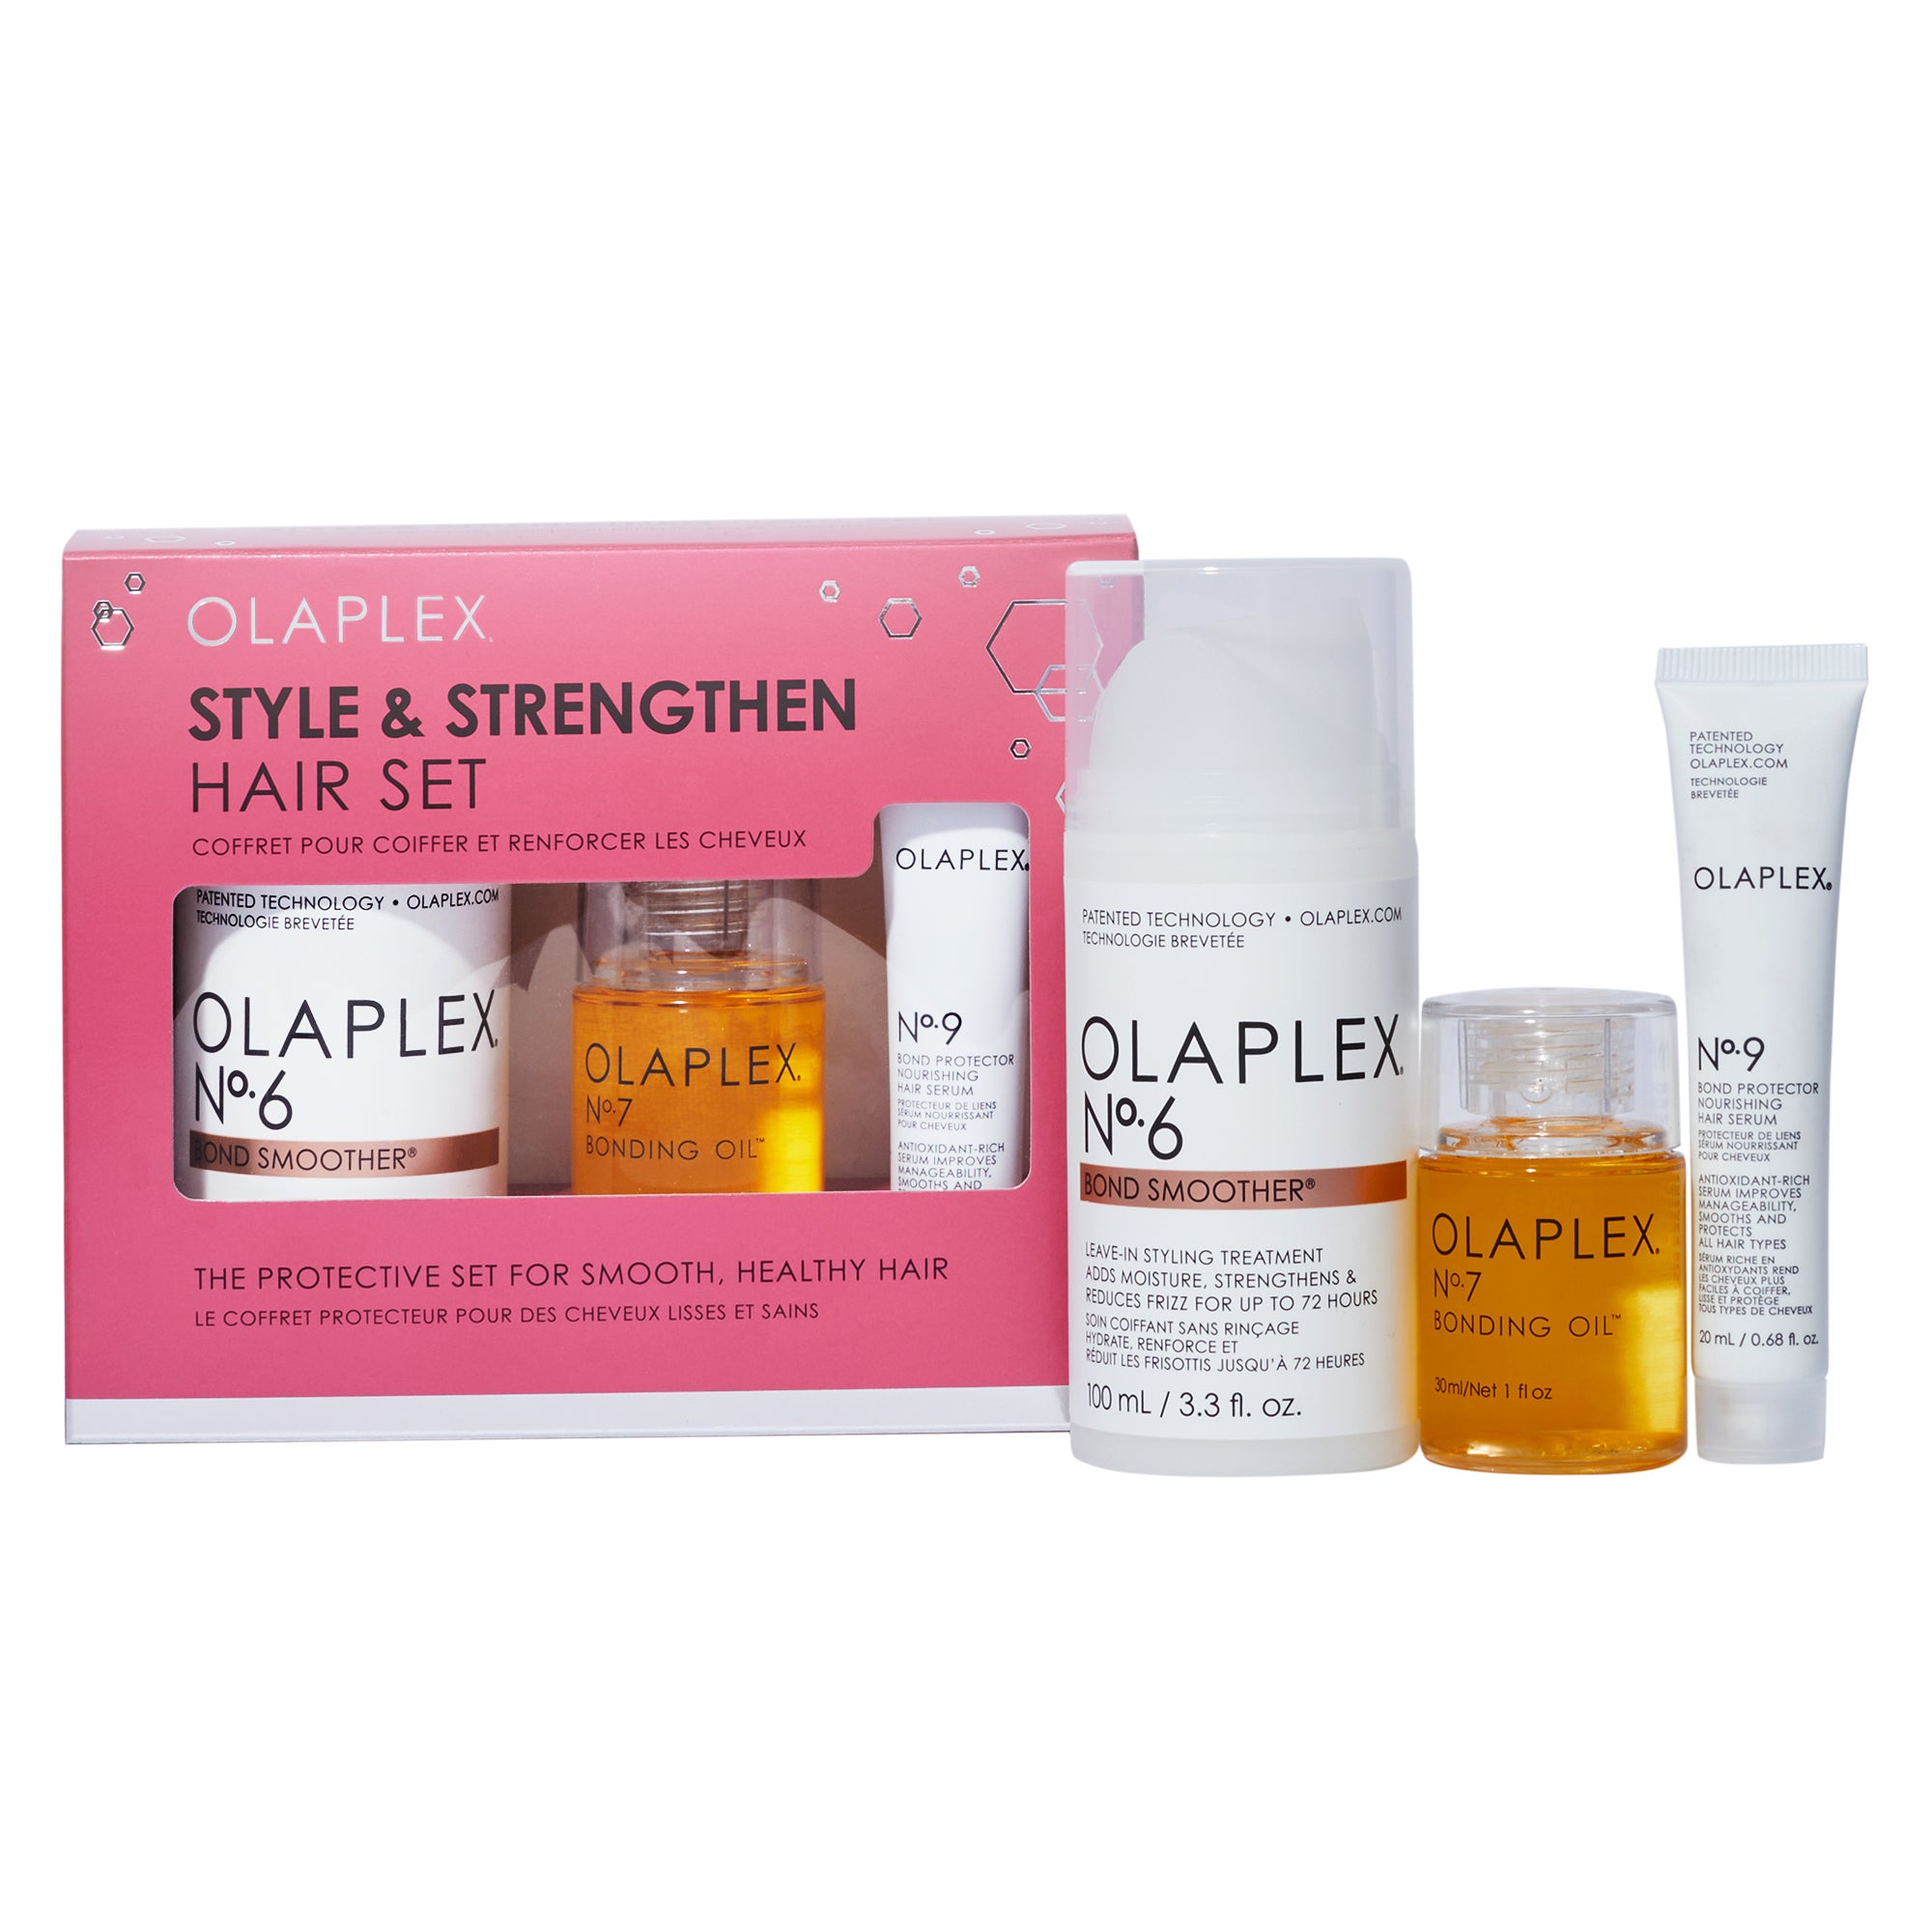 STYLE & STRENGTHEN HAIR SET - OLAPLEX Inc.